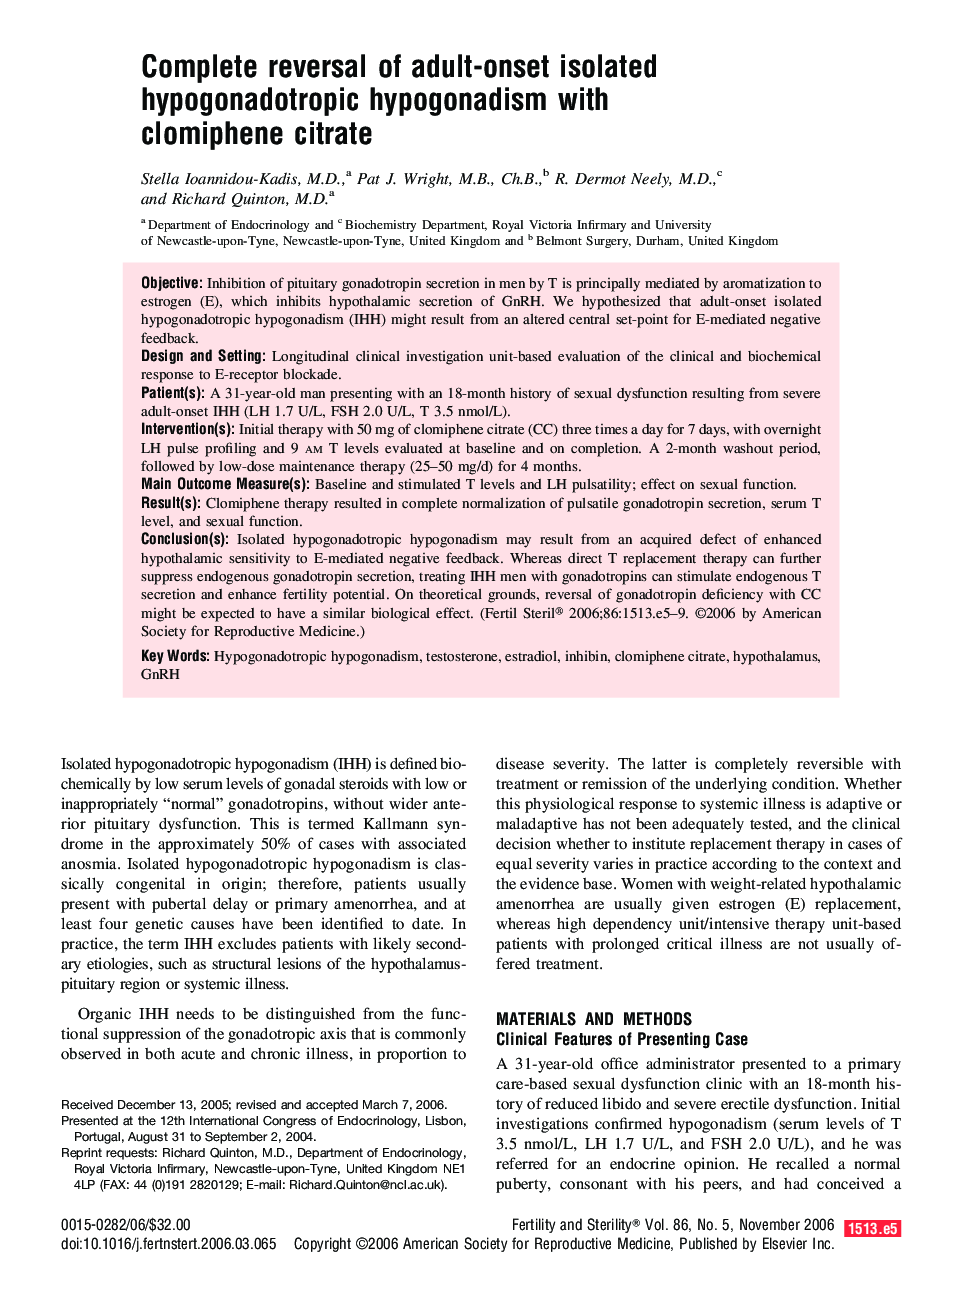 Complete reversal of adult-onset isolated hypogonadotropic hypogonadism with clomiphene citrate